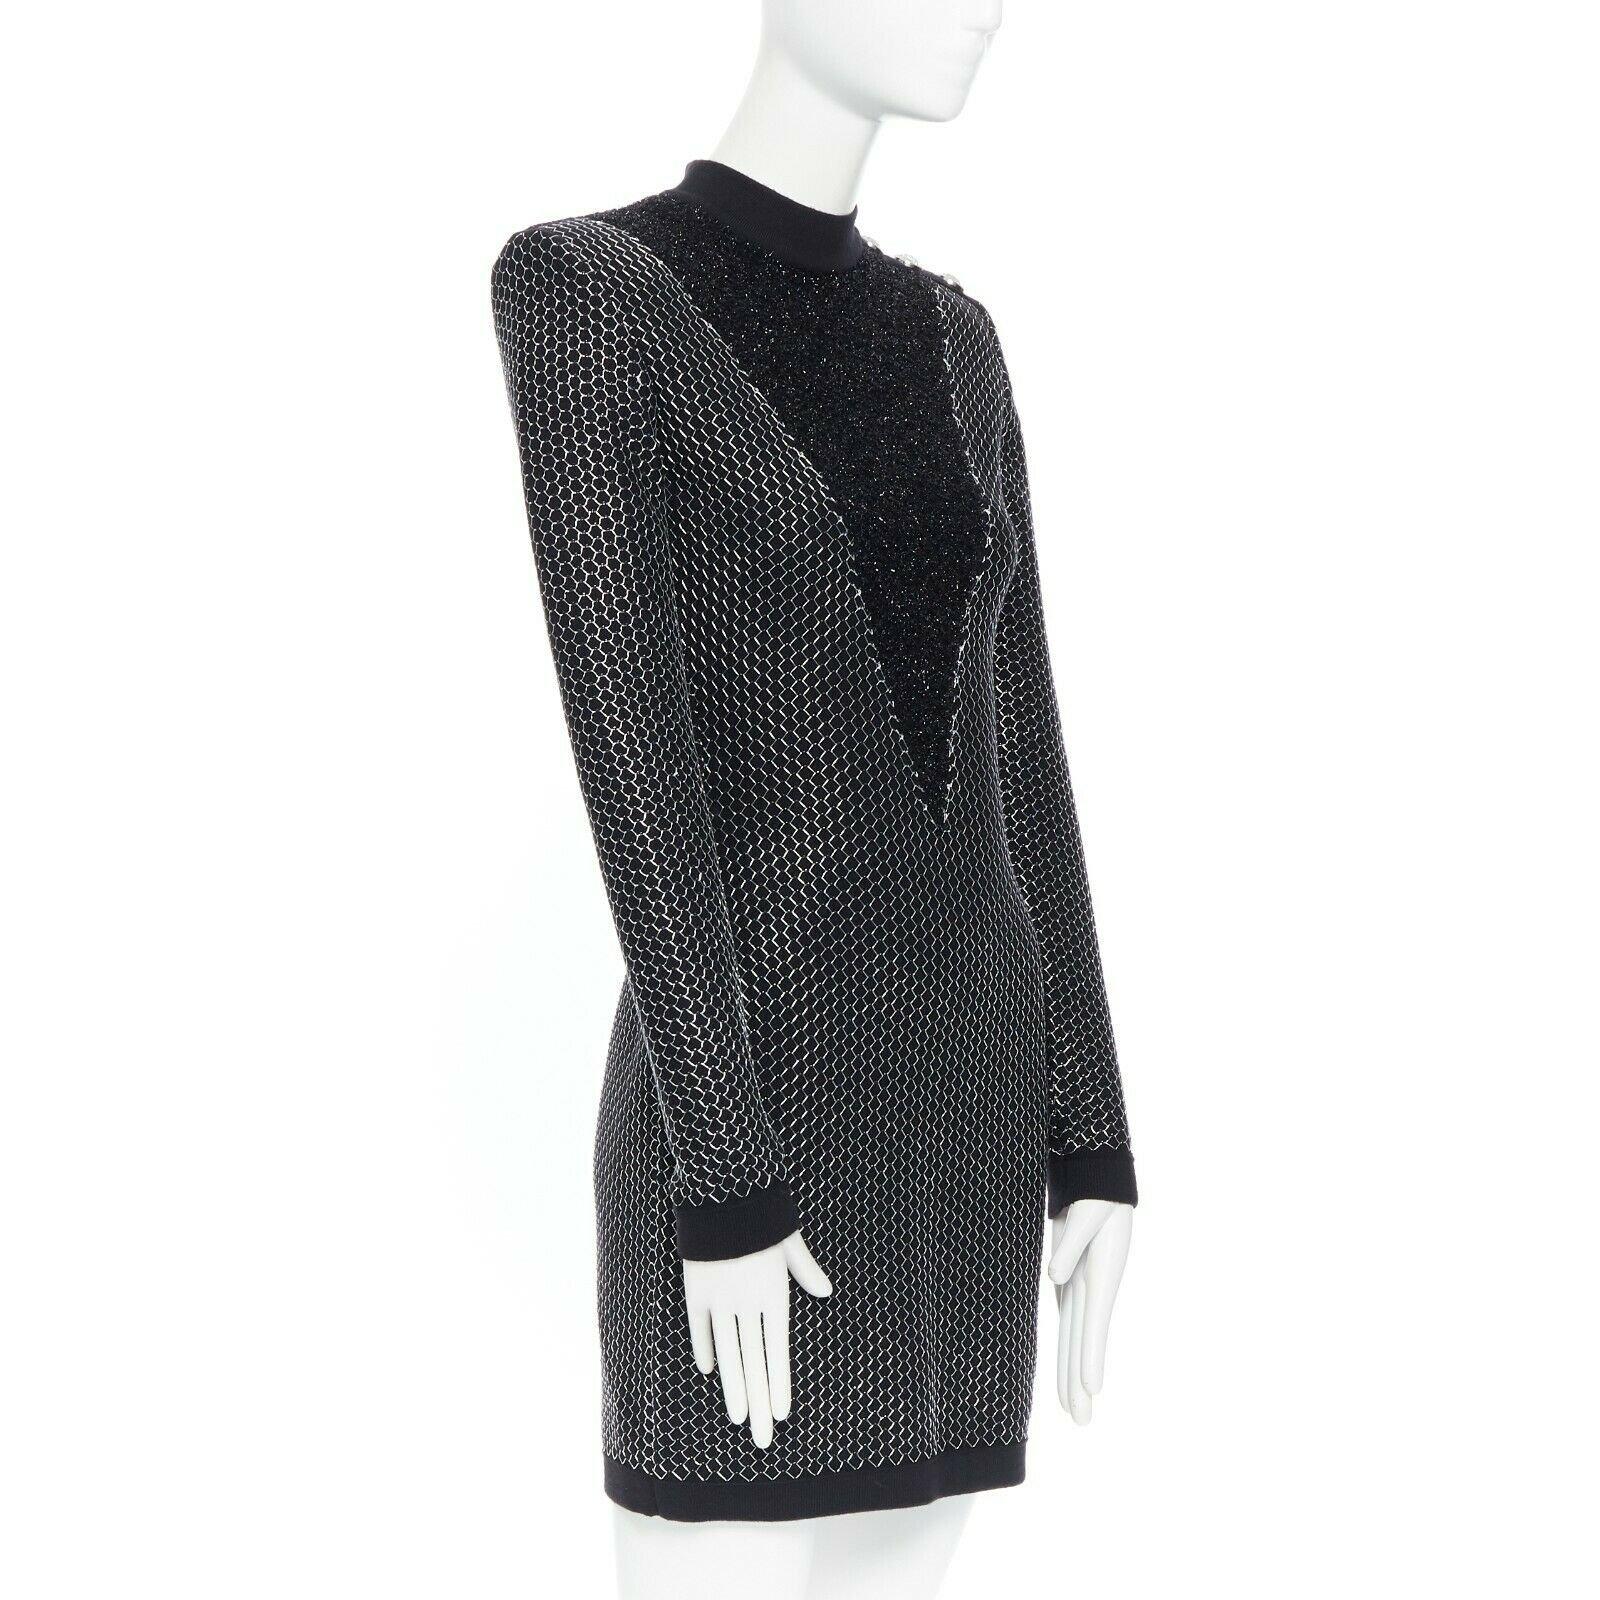 Black BALMAIN ROUSTEING black silver thread fluffy military button bodycon dress S